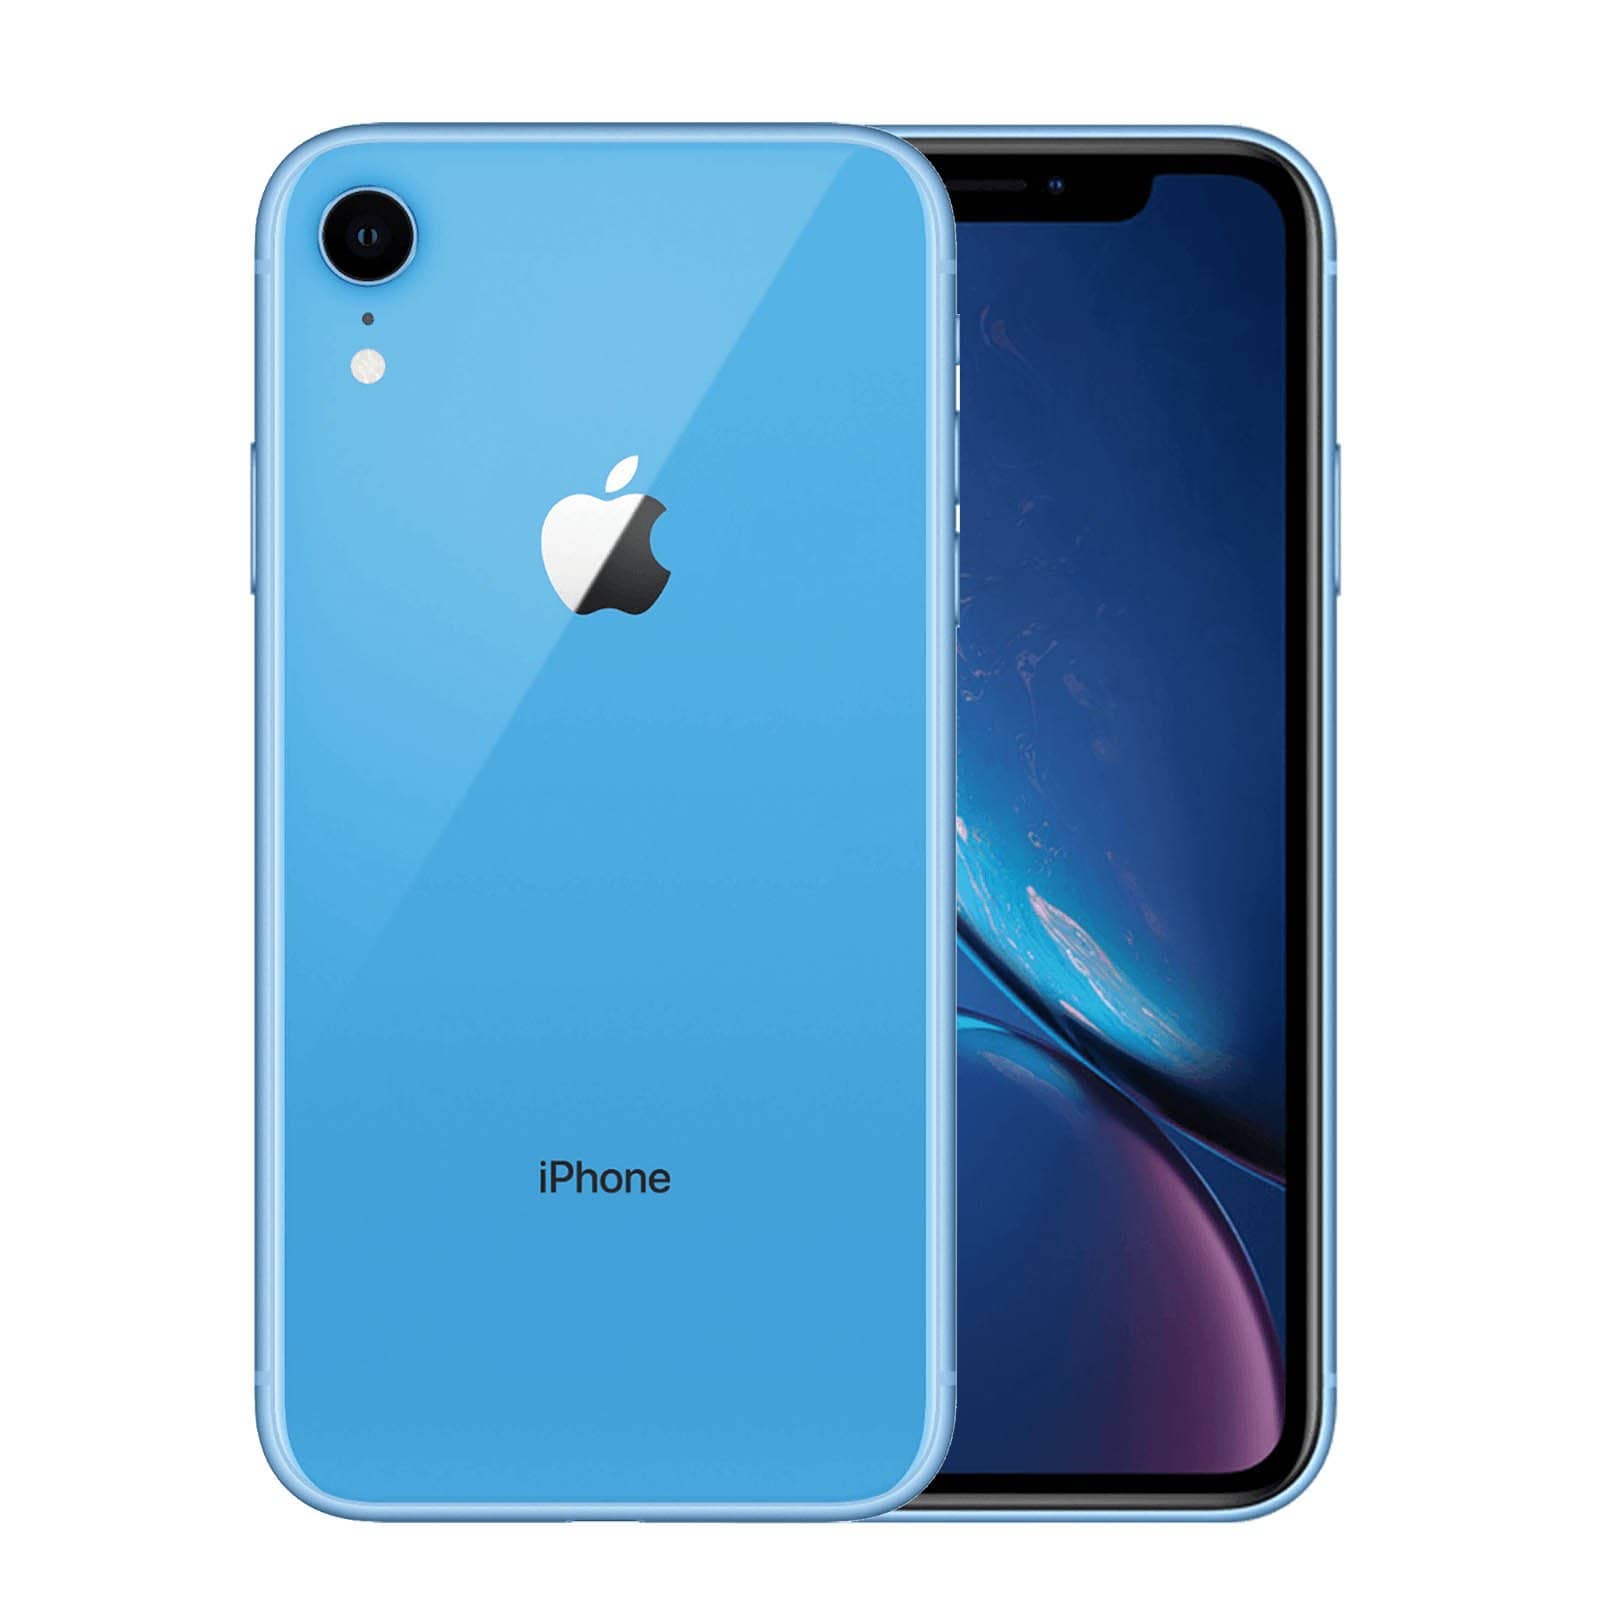 Apple iPhone XR 64GB Blue Very Good - Unlocked 64GB Blue Very Good